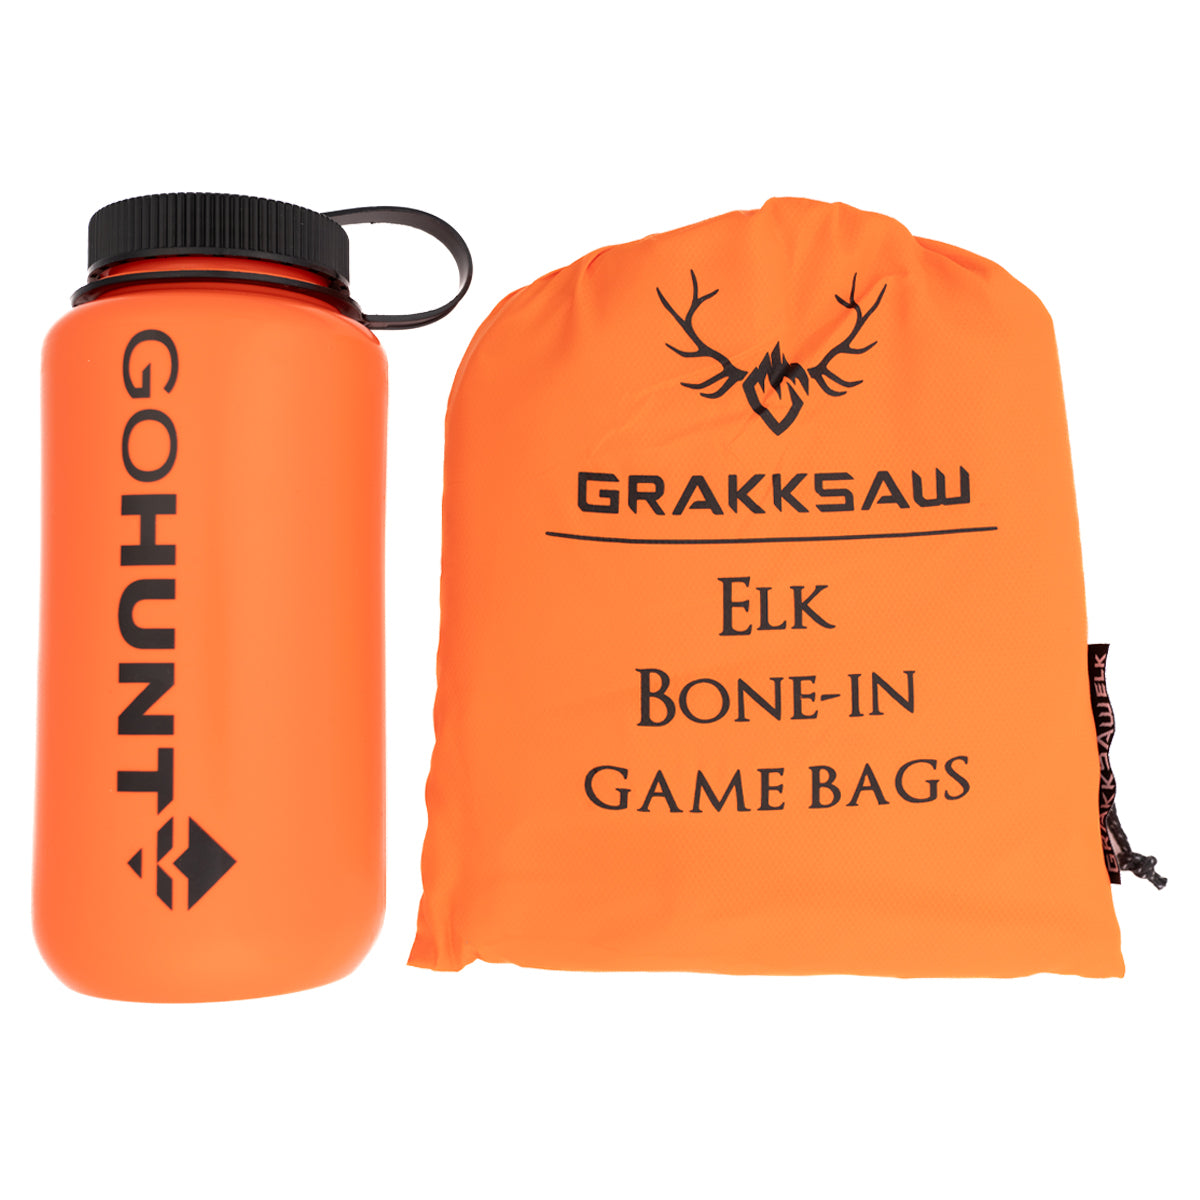 Grakksaw Elk Game Bags in  by GOHUNT | Grakksaw - GOHUNT Shop